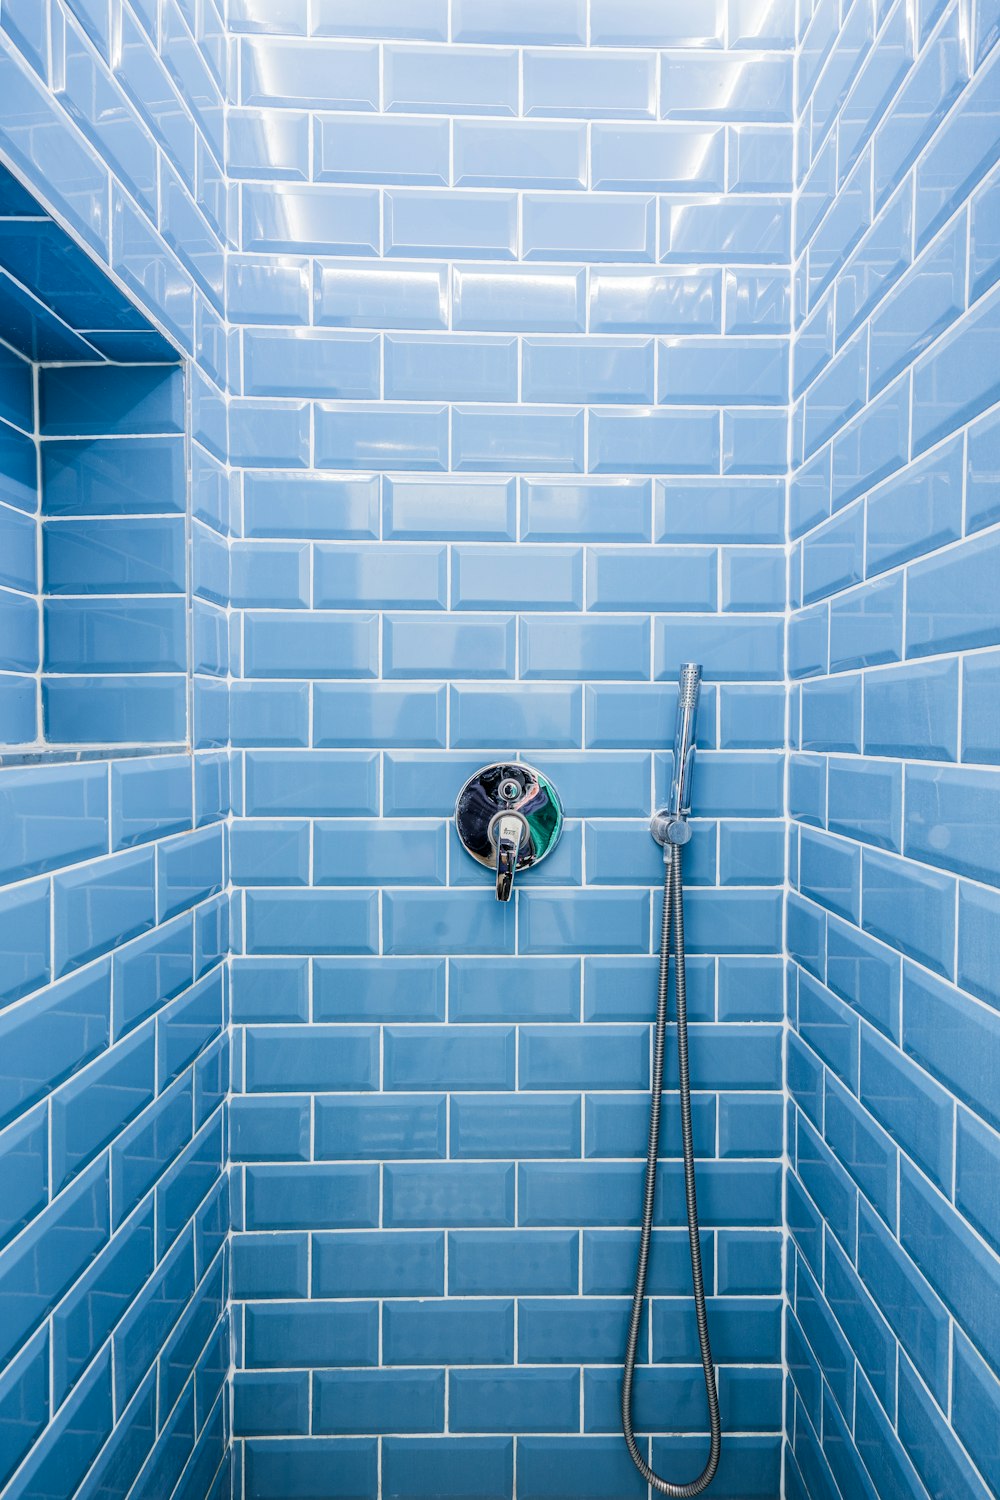 Bathroom Tile Pictures Free, Blue Bathroom Tiles Image